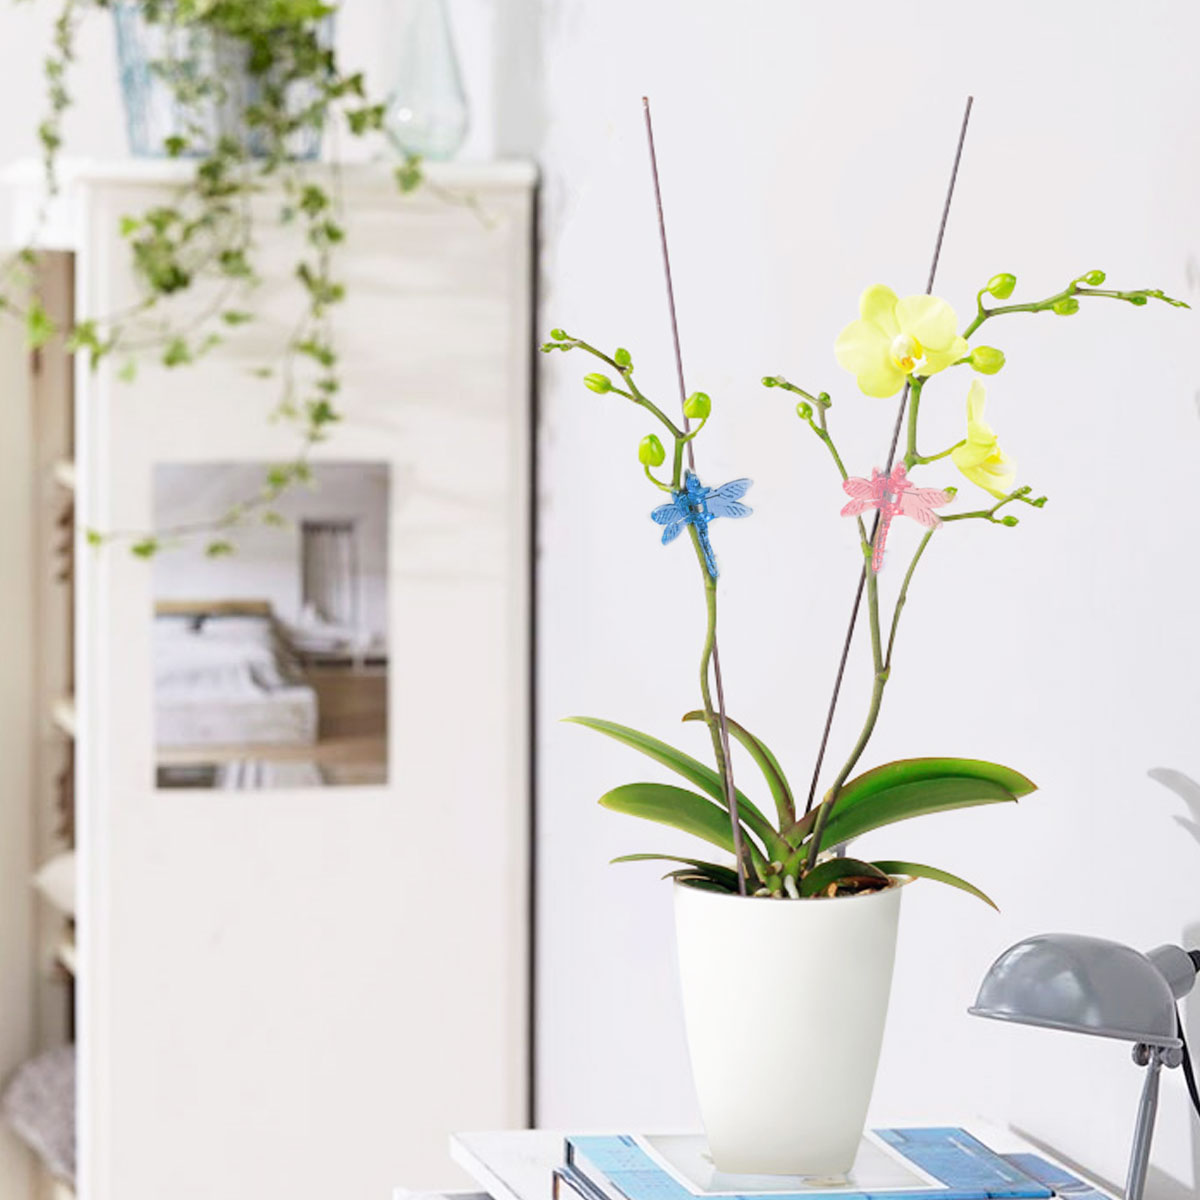 100x/Bag Garden Plant Support Clips Flower Orchid Stem Clips for Vine SuY_lp 